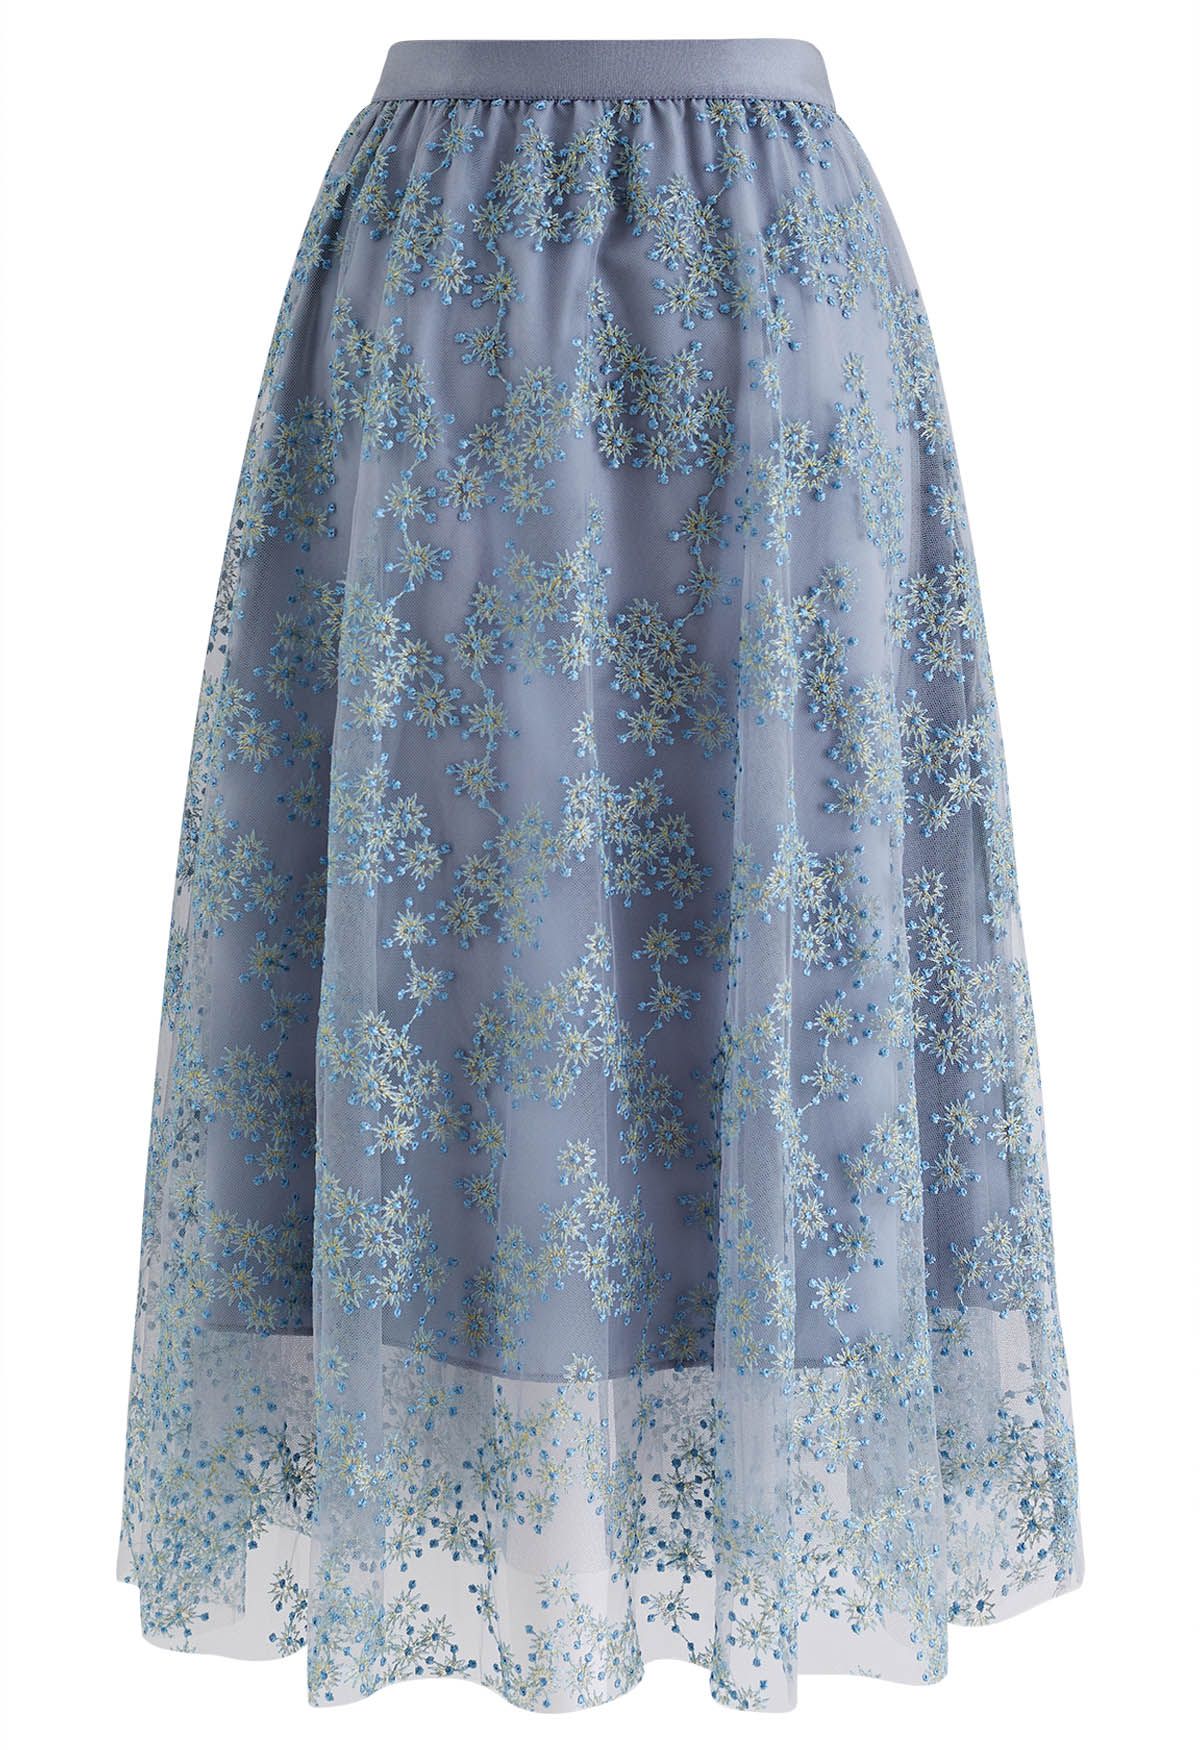 Metallic Embroidered Floret Mesh Midi Skirt in Dusty Blue